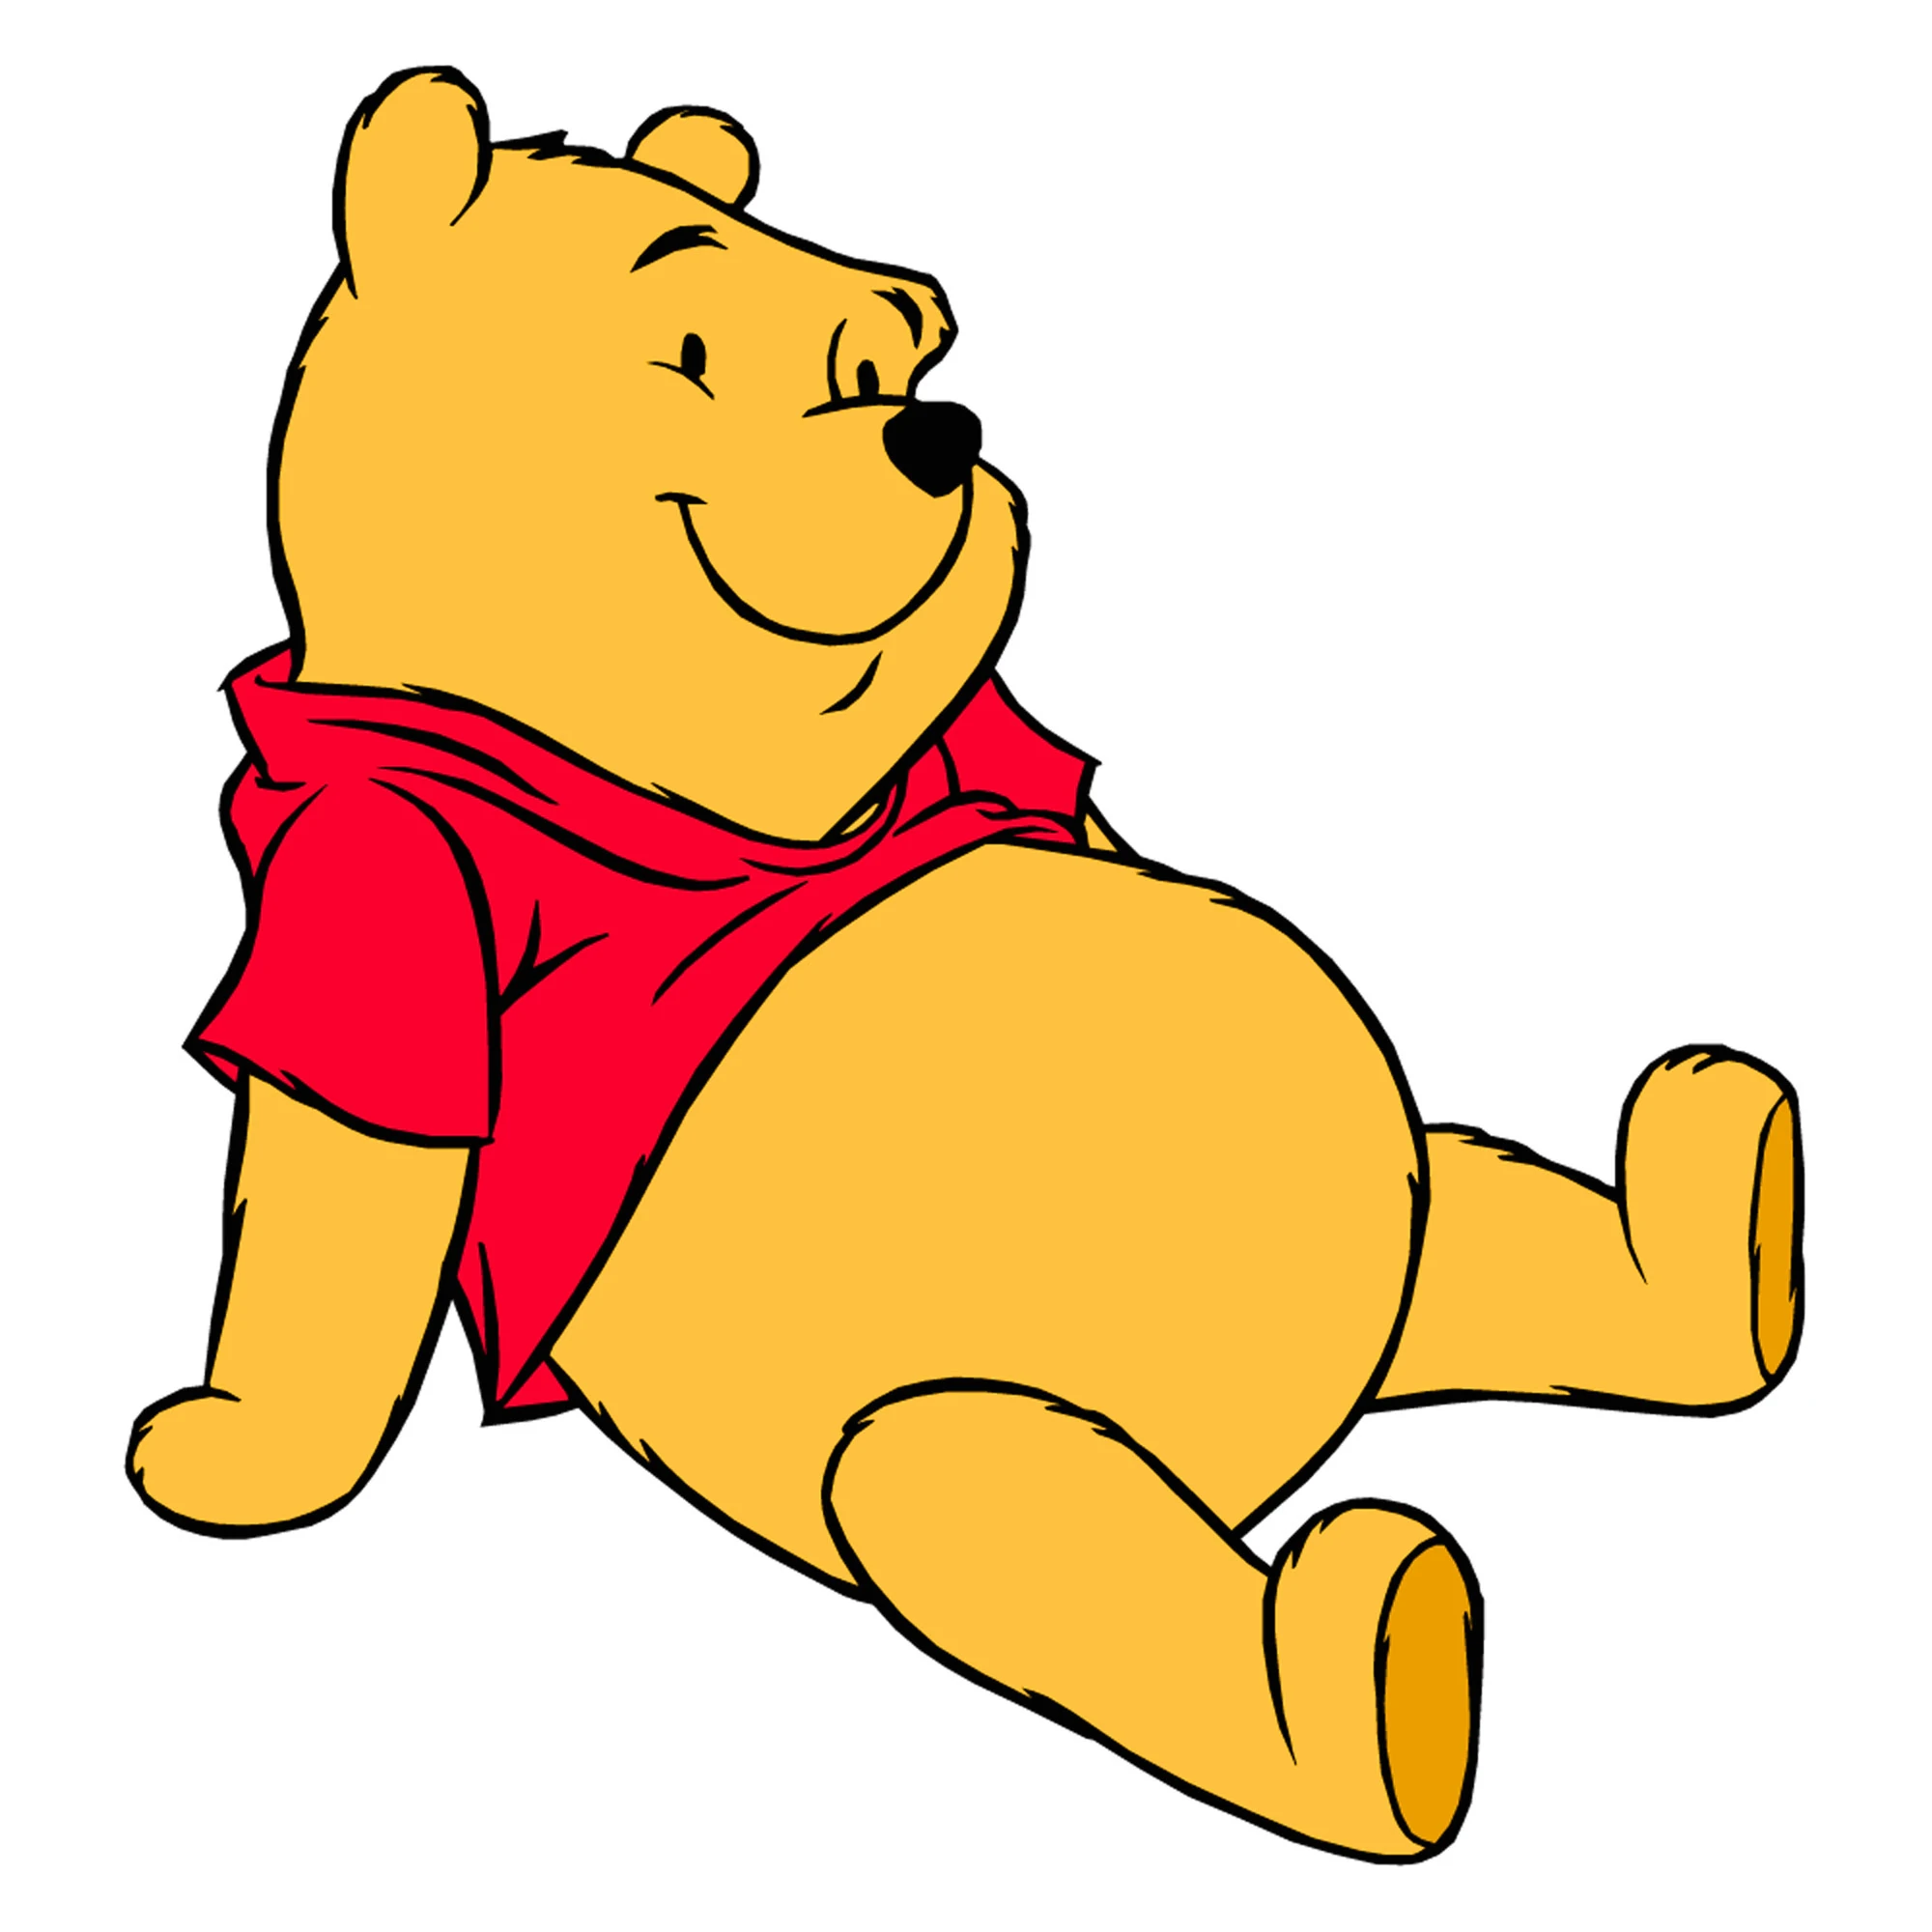 Winnie The Pooh la mot nhan vat trong cau chuyen cua mot nha van nguoi Anh